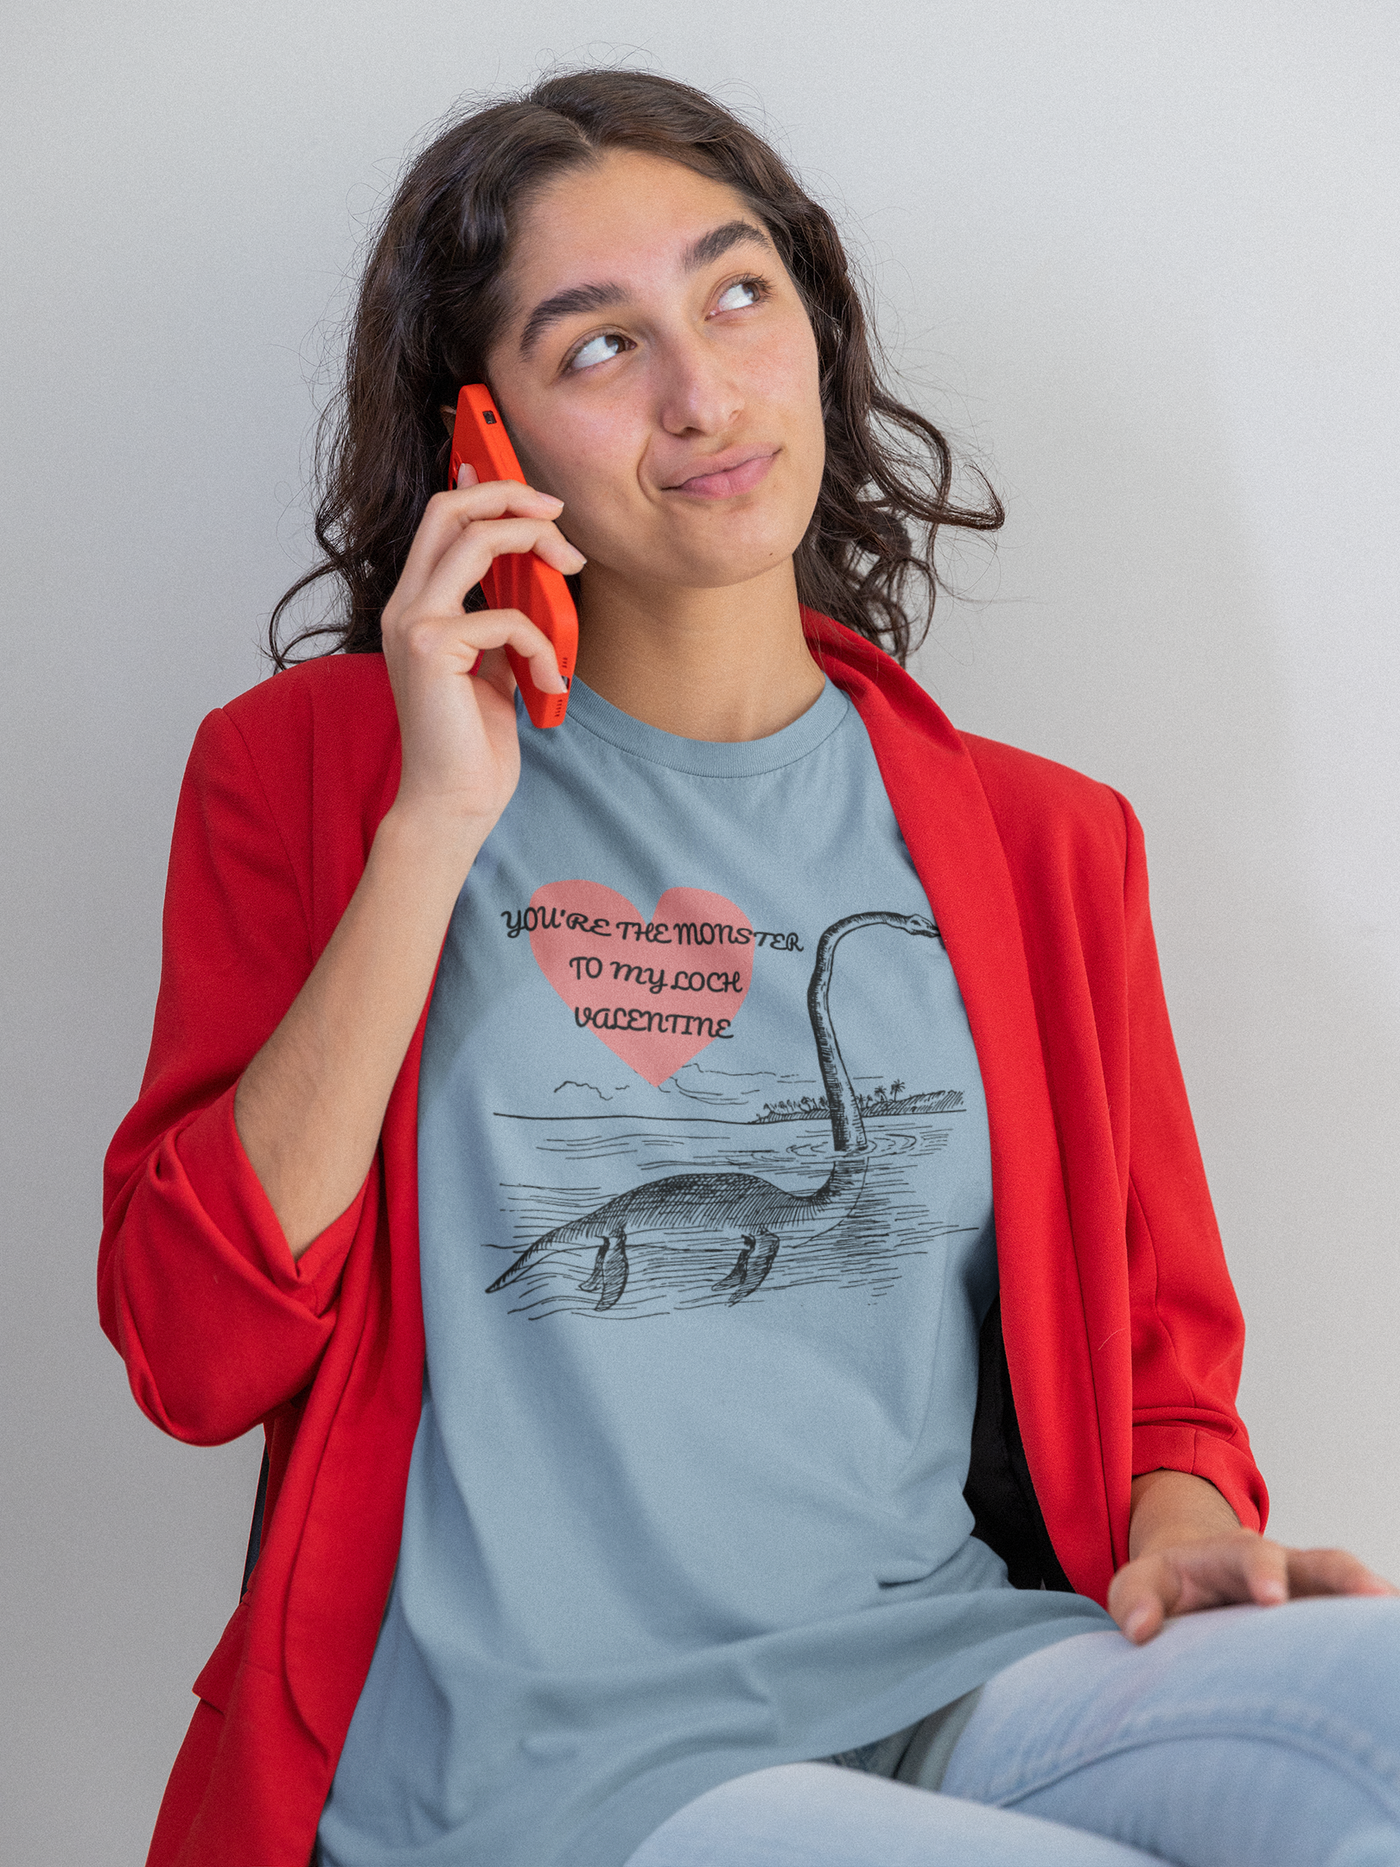 Loch Ness Monster - Valentine's Day - Graphic t-shirt